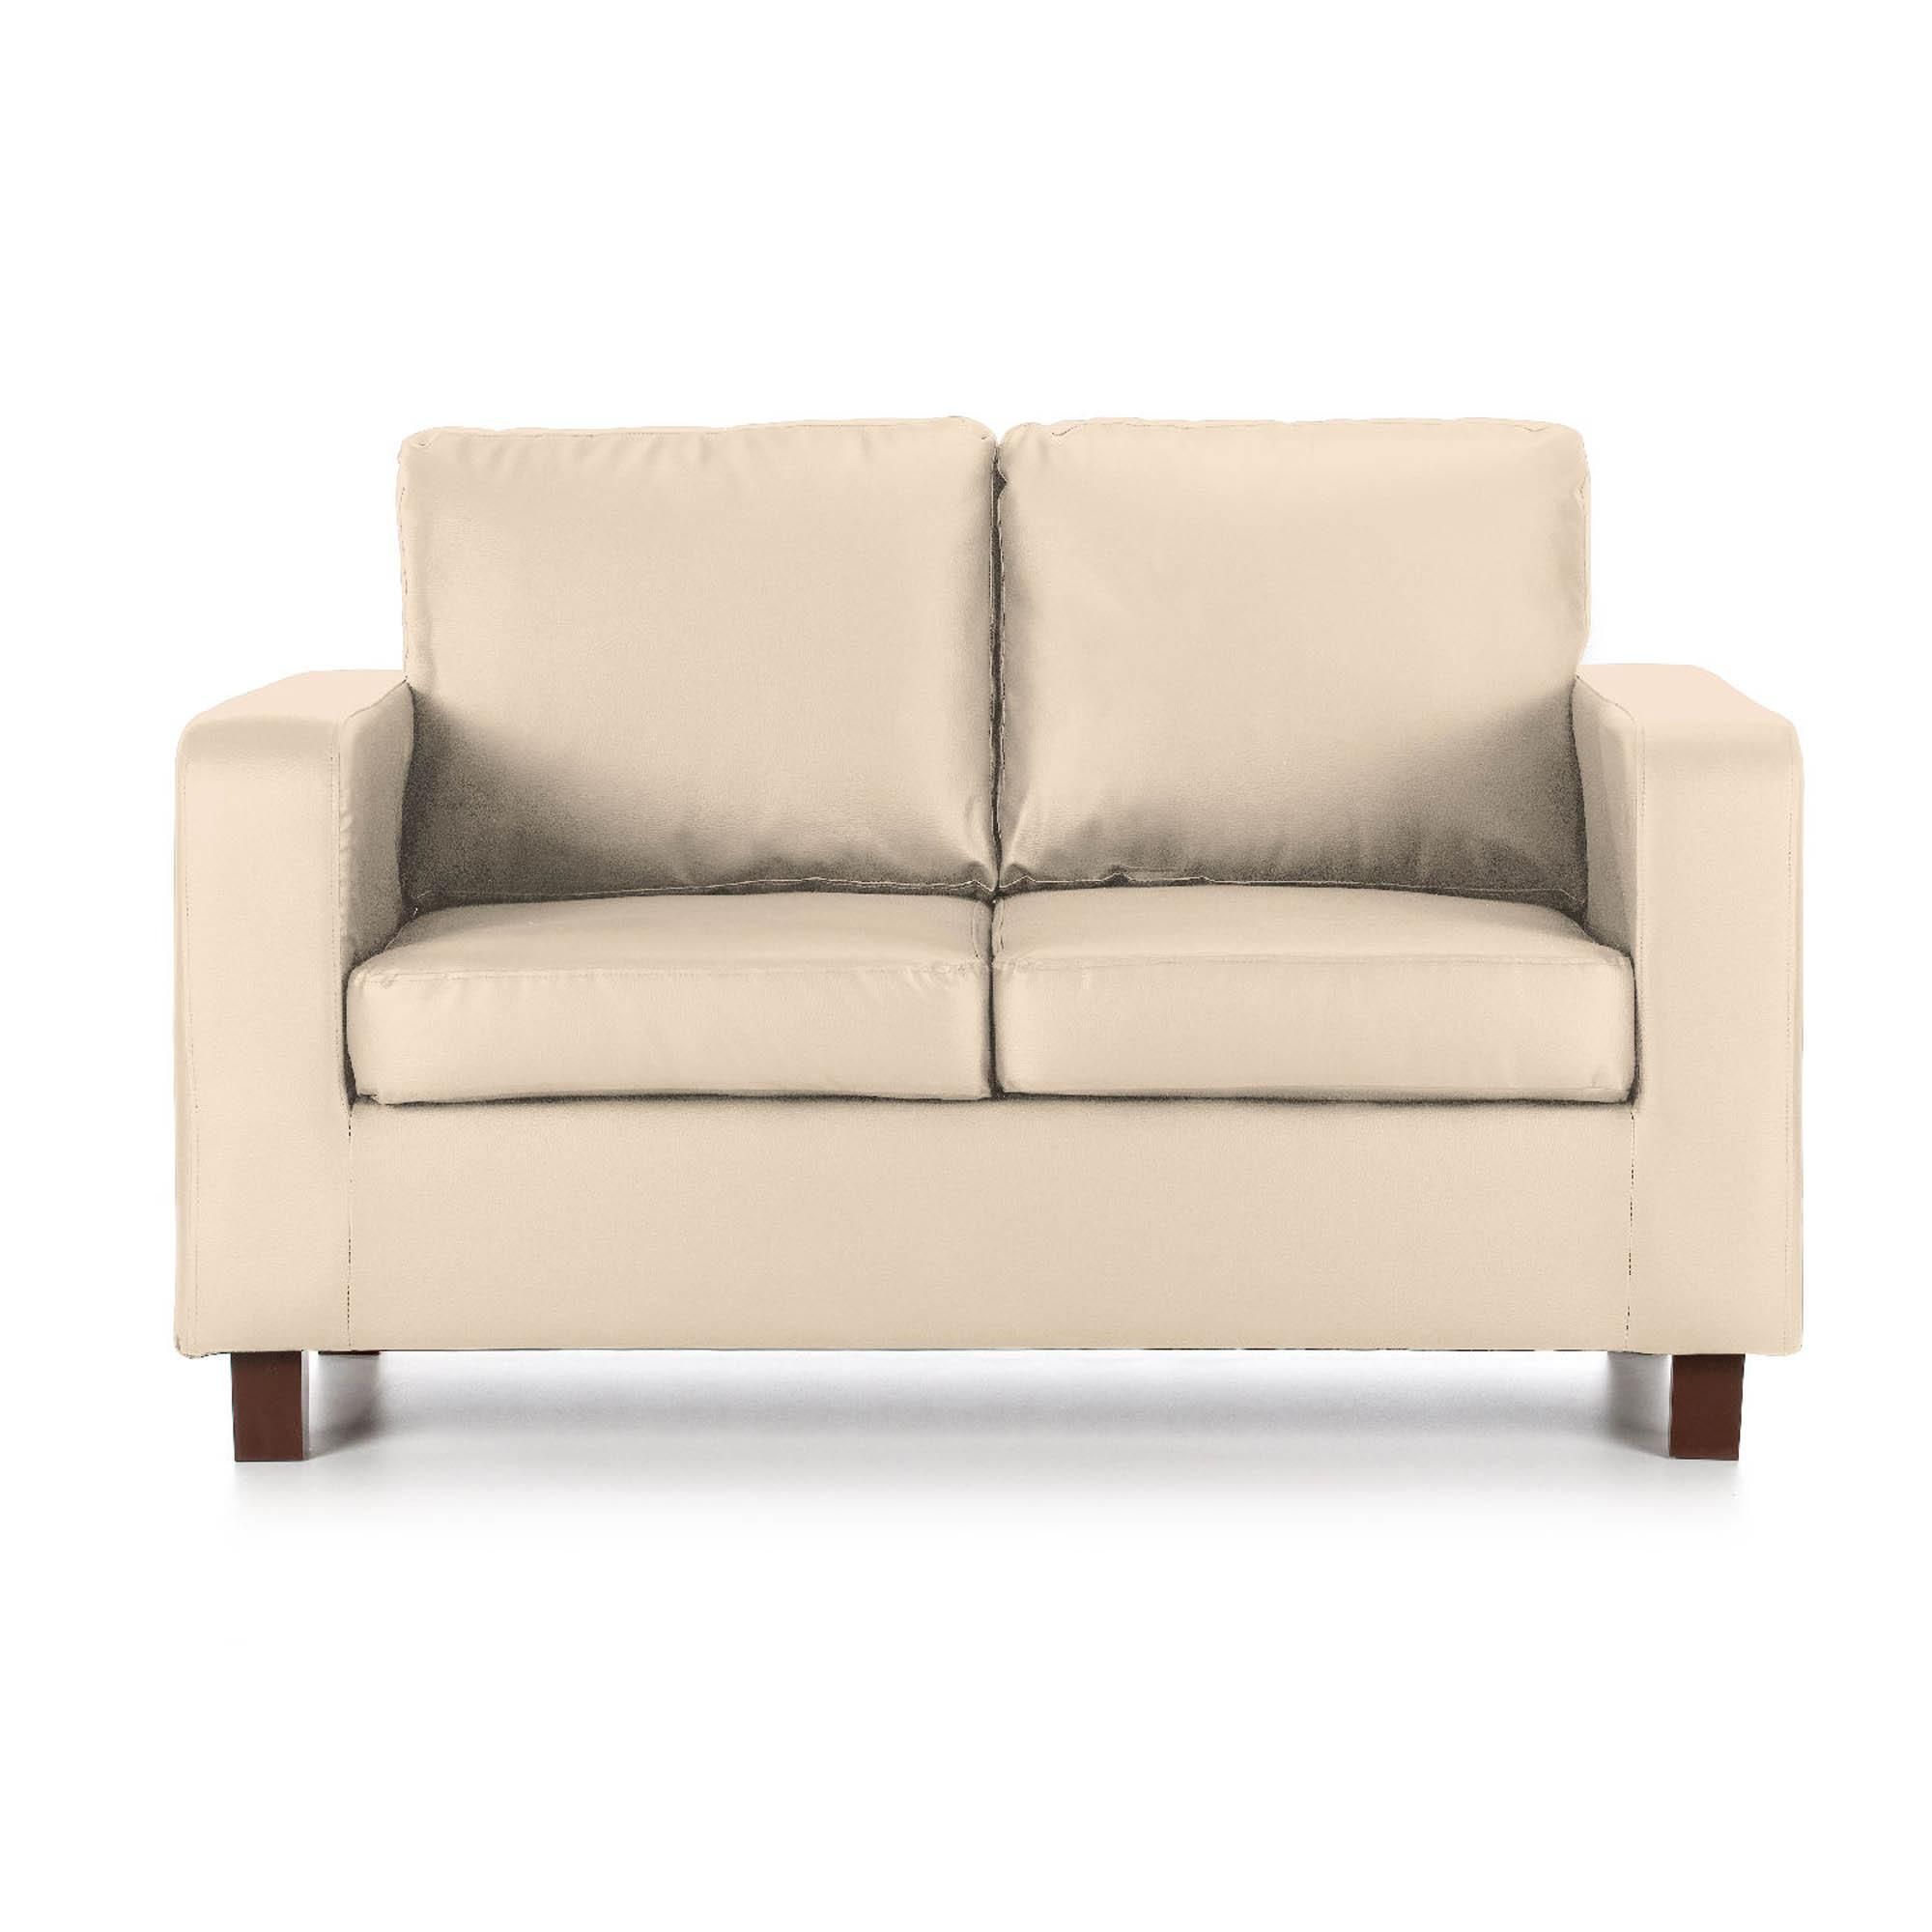 Cream Leather Sofa Inspiration